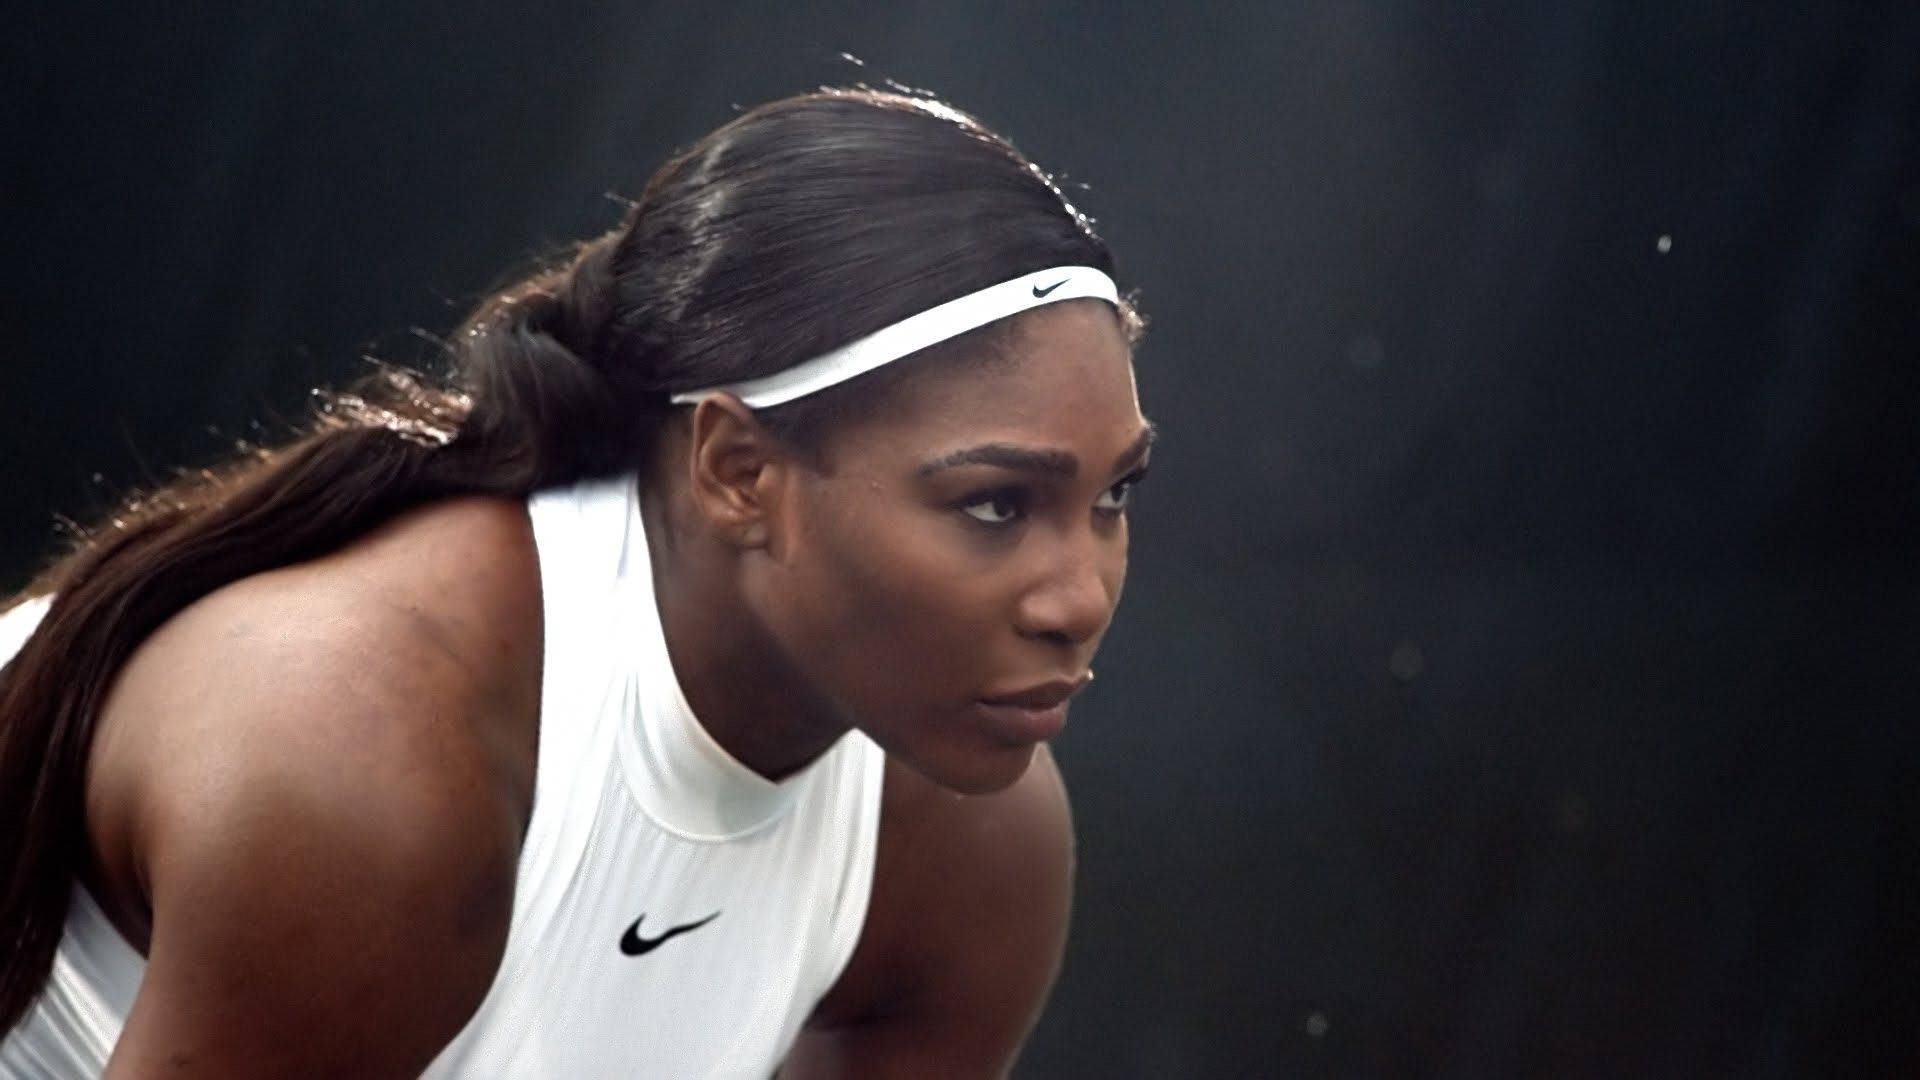 Beautiful Athlete Serena Williams